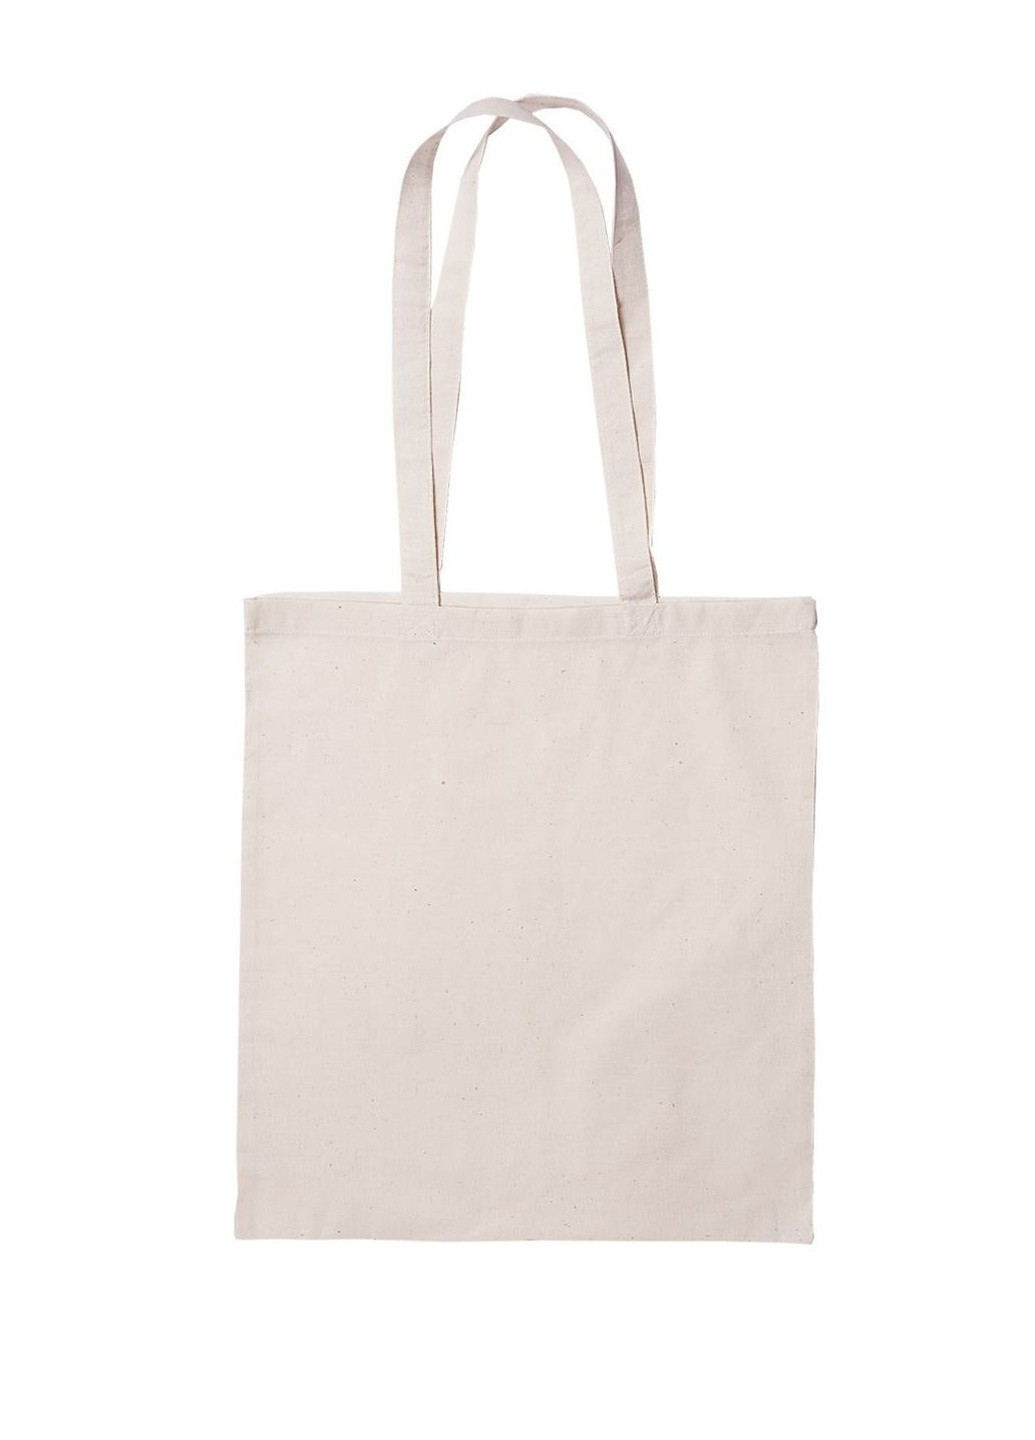 Эко-сумка шоппер из хлопка бежевая Discover shopping (251272366)